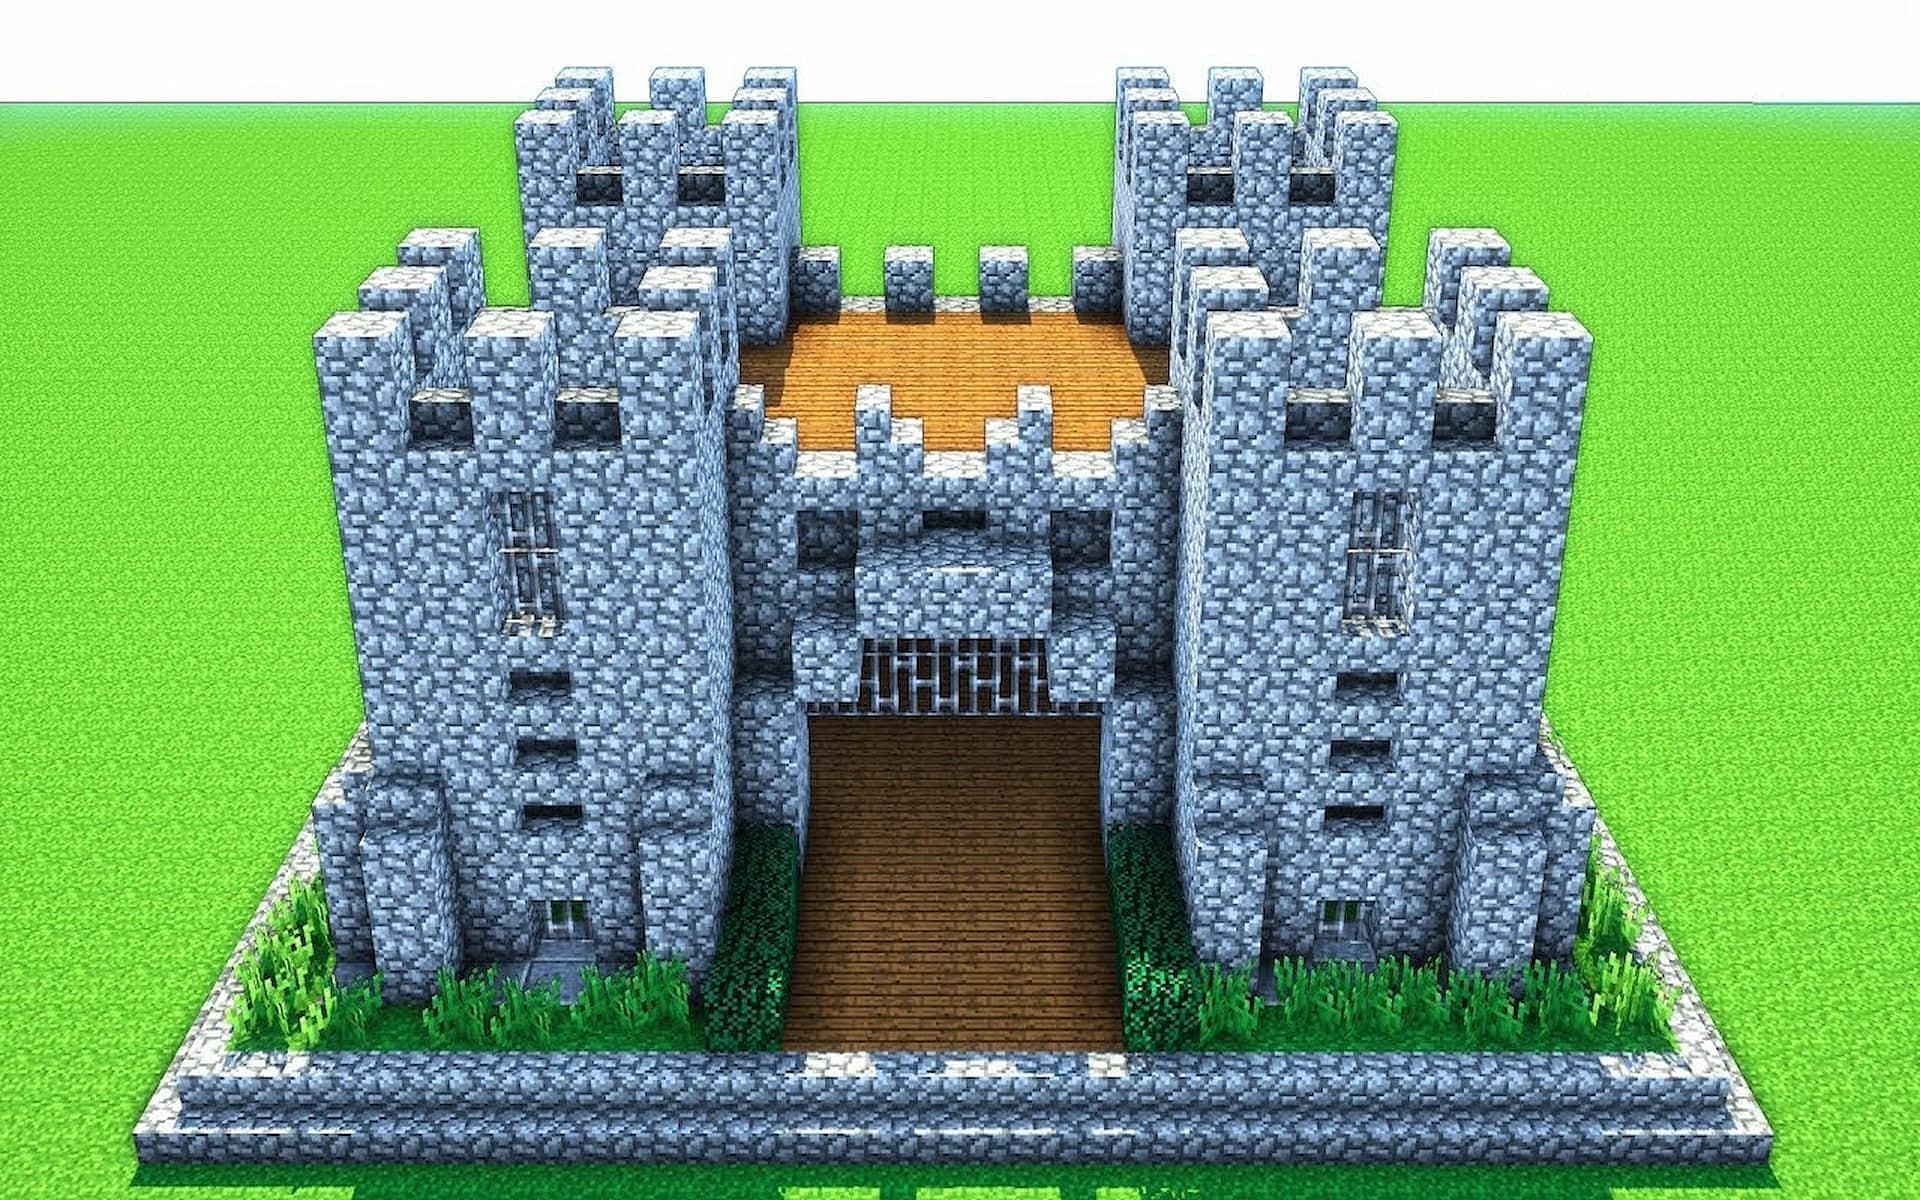 7 Best Minecraft Castle Designs For Beginners In 2022